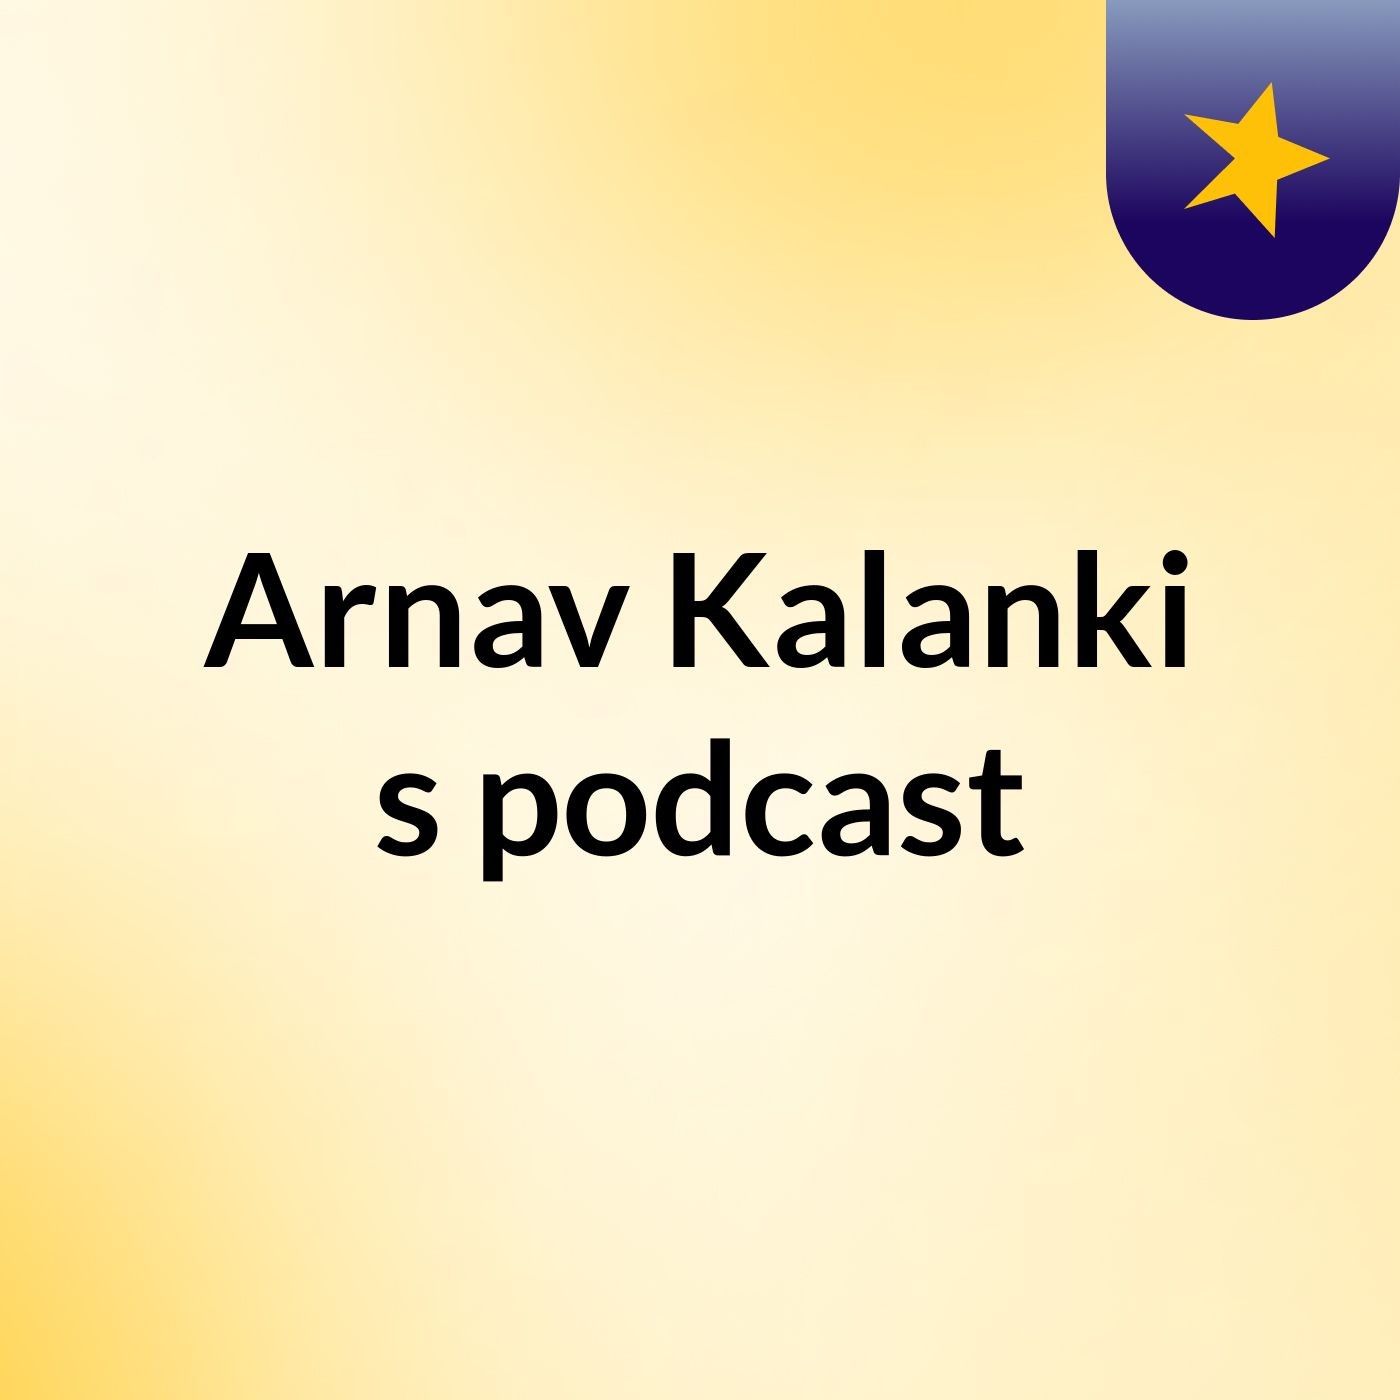 Arnav Kalanki's podcast